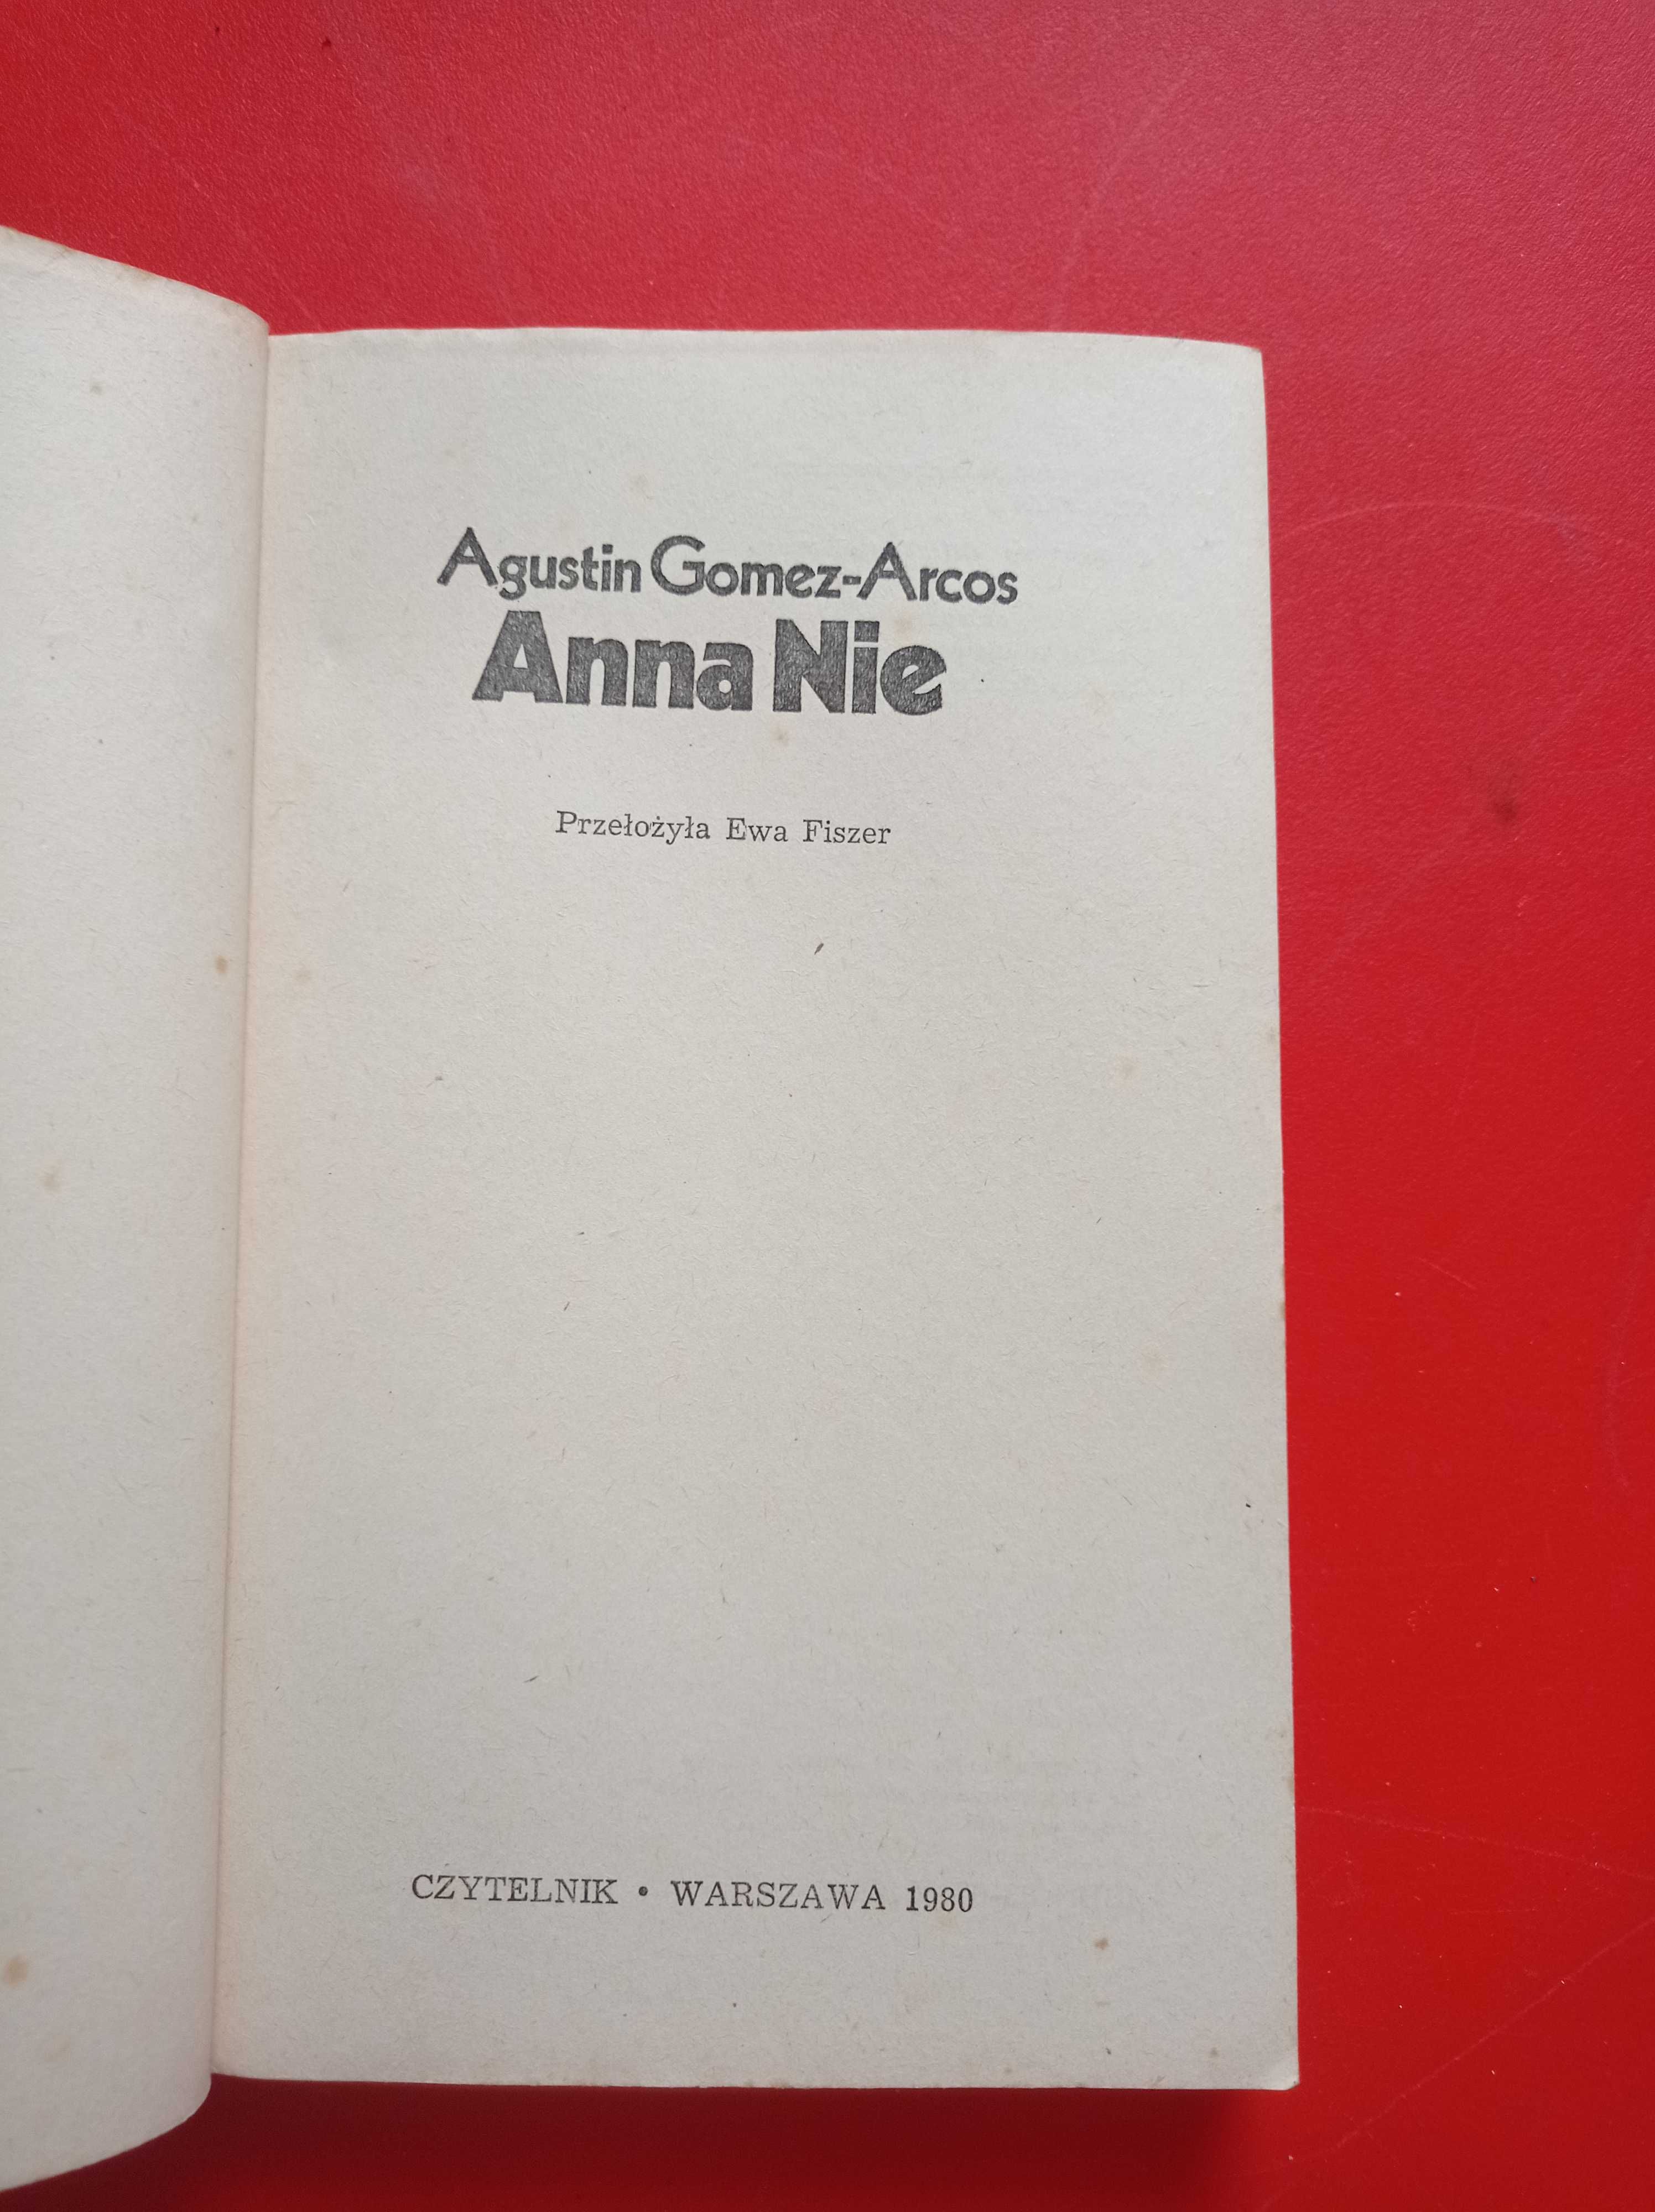 Anna Nie, Agustin Gomez - Arcos